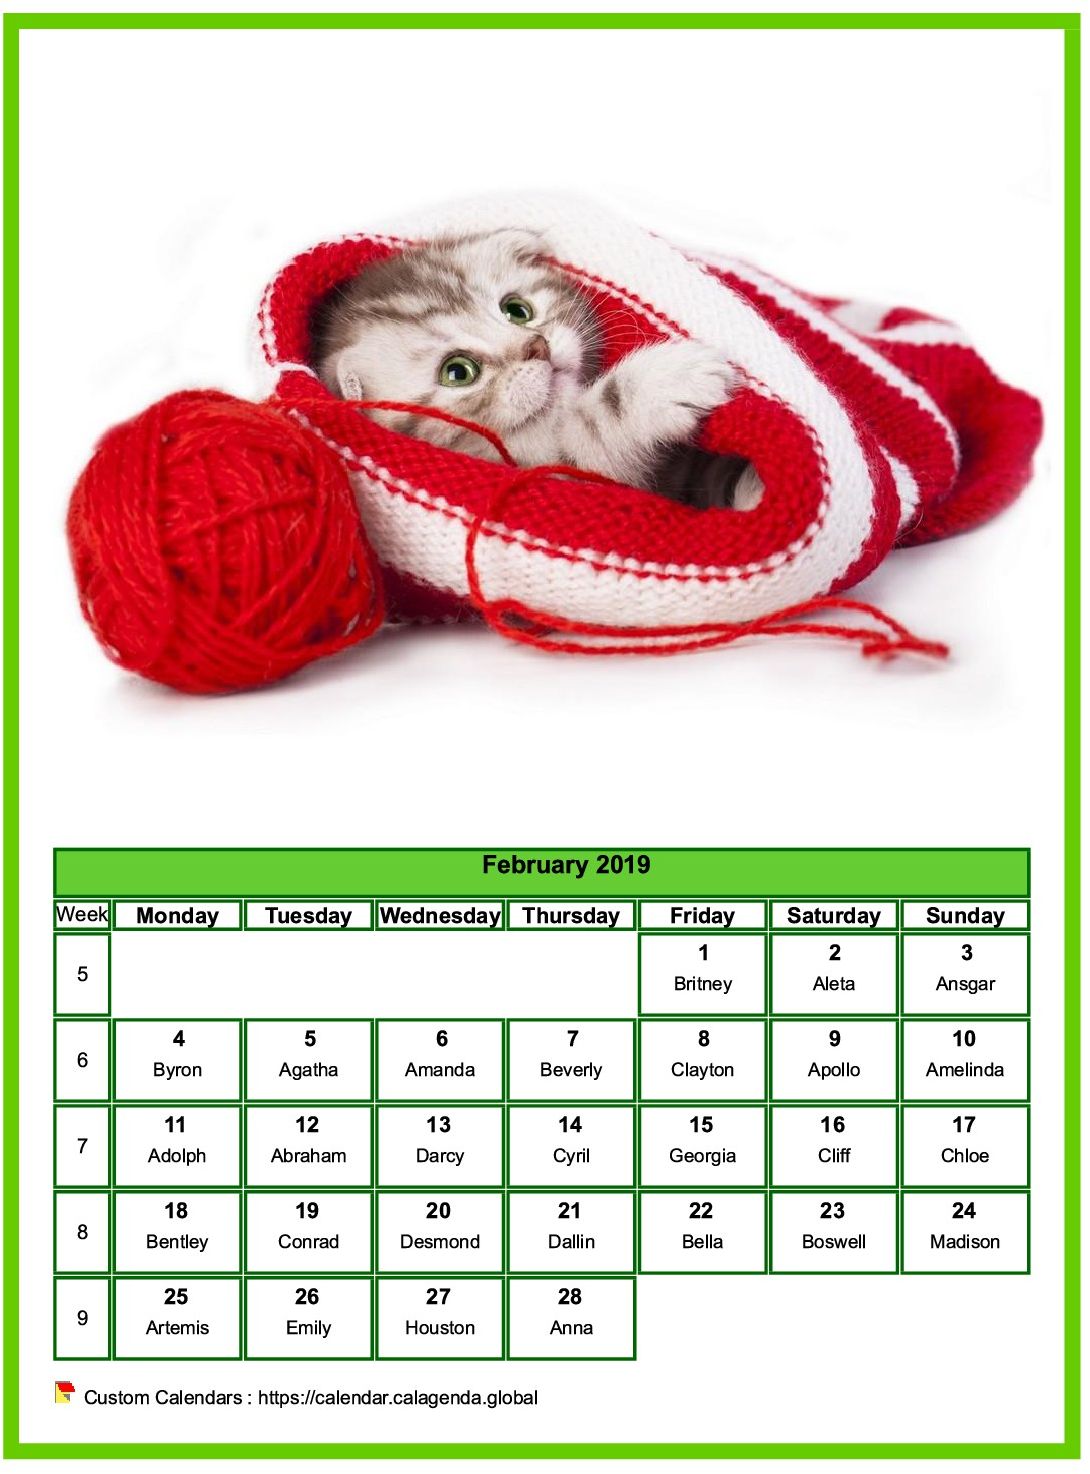 Calendar February 2019 cats